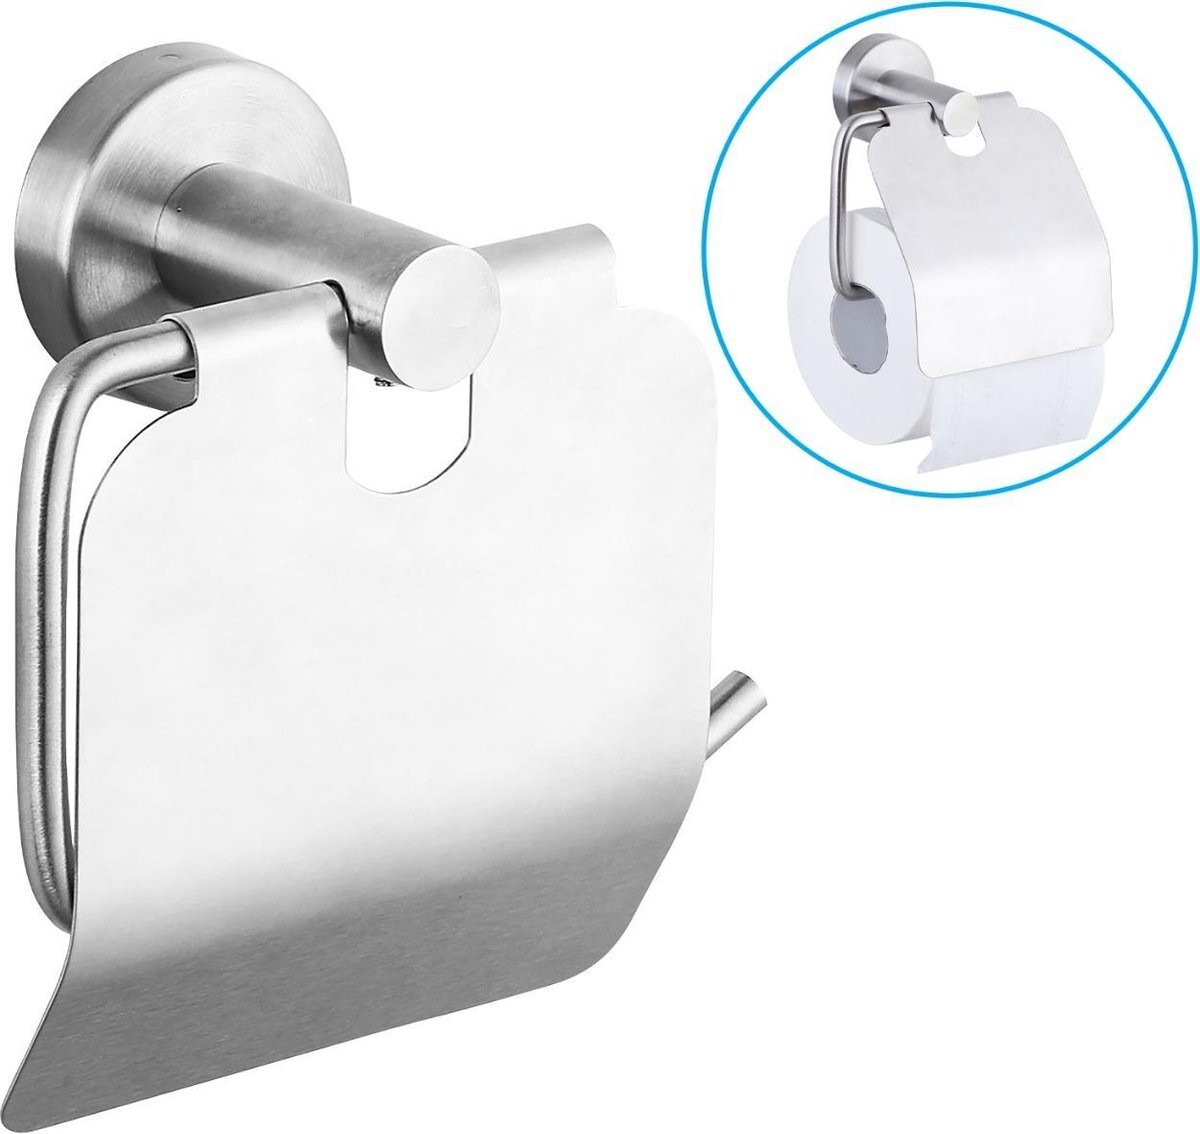 Sanics Toiletrolhouder Zilver met Klep - WC Rolhouder RVS Inclusief Montage set - Closetrolhouder